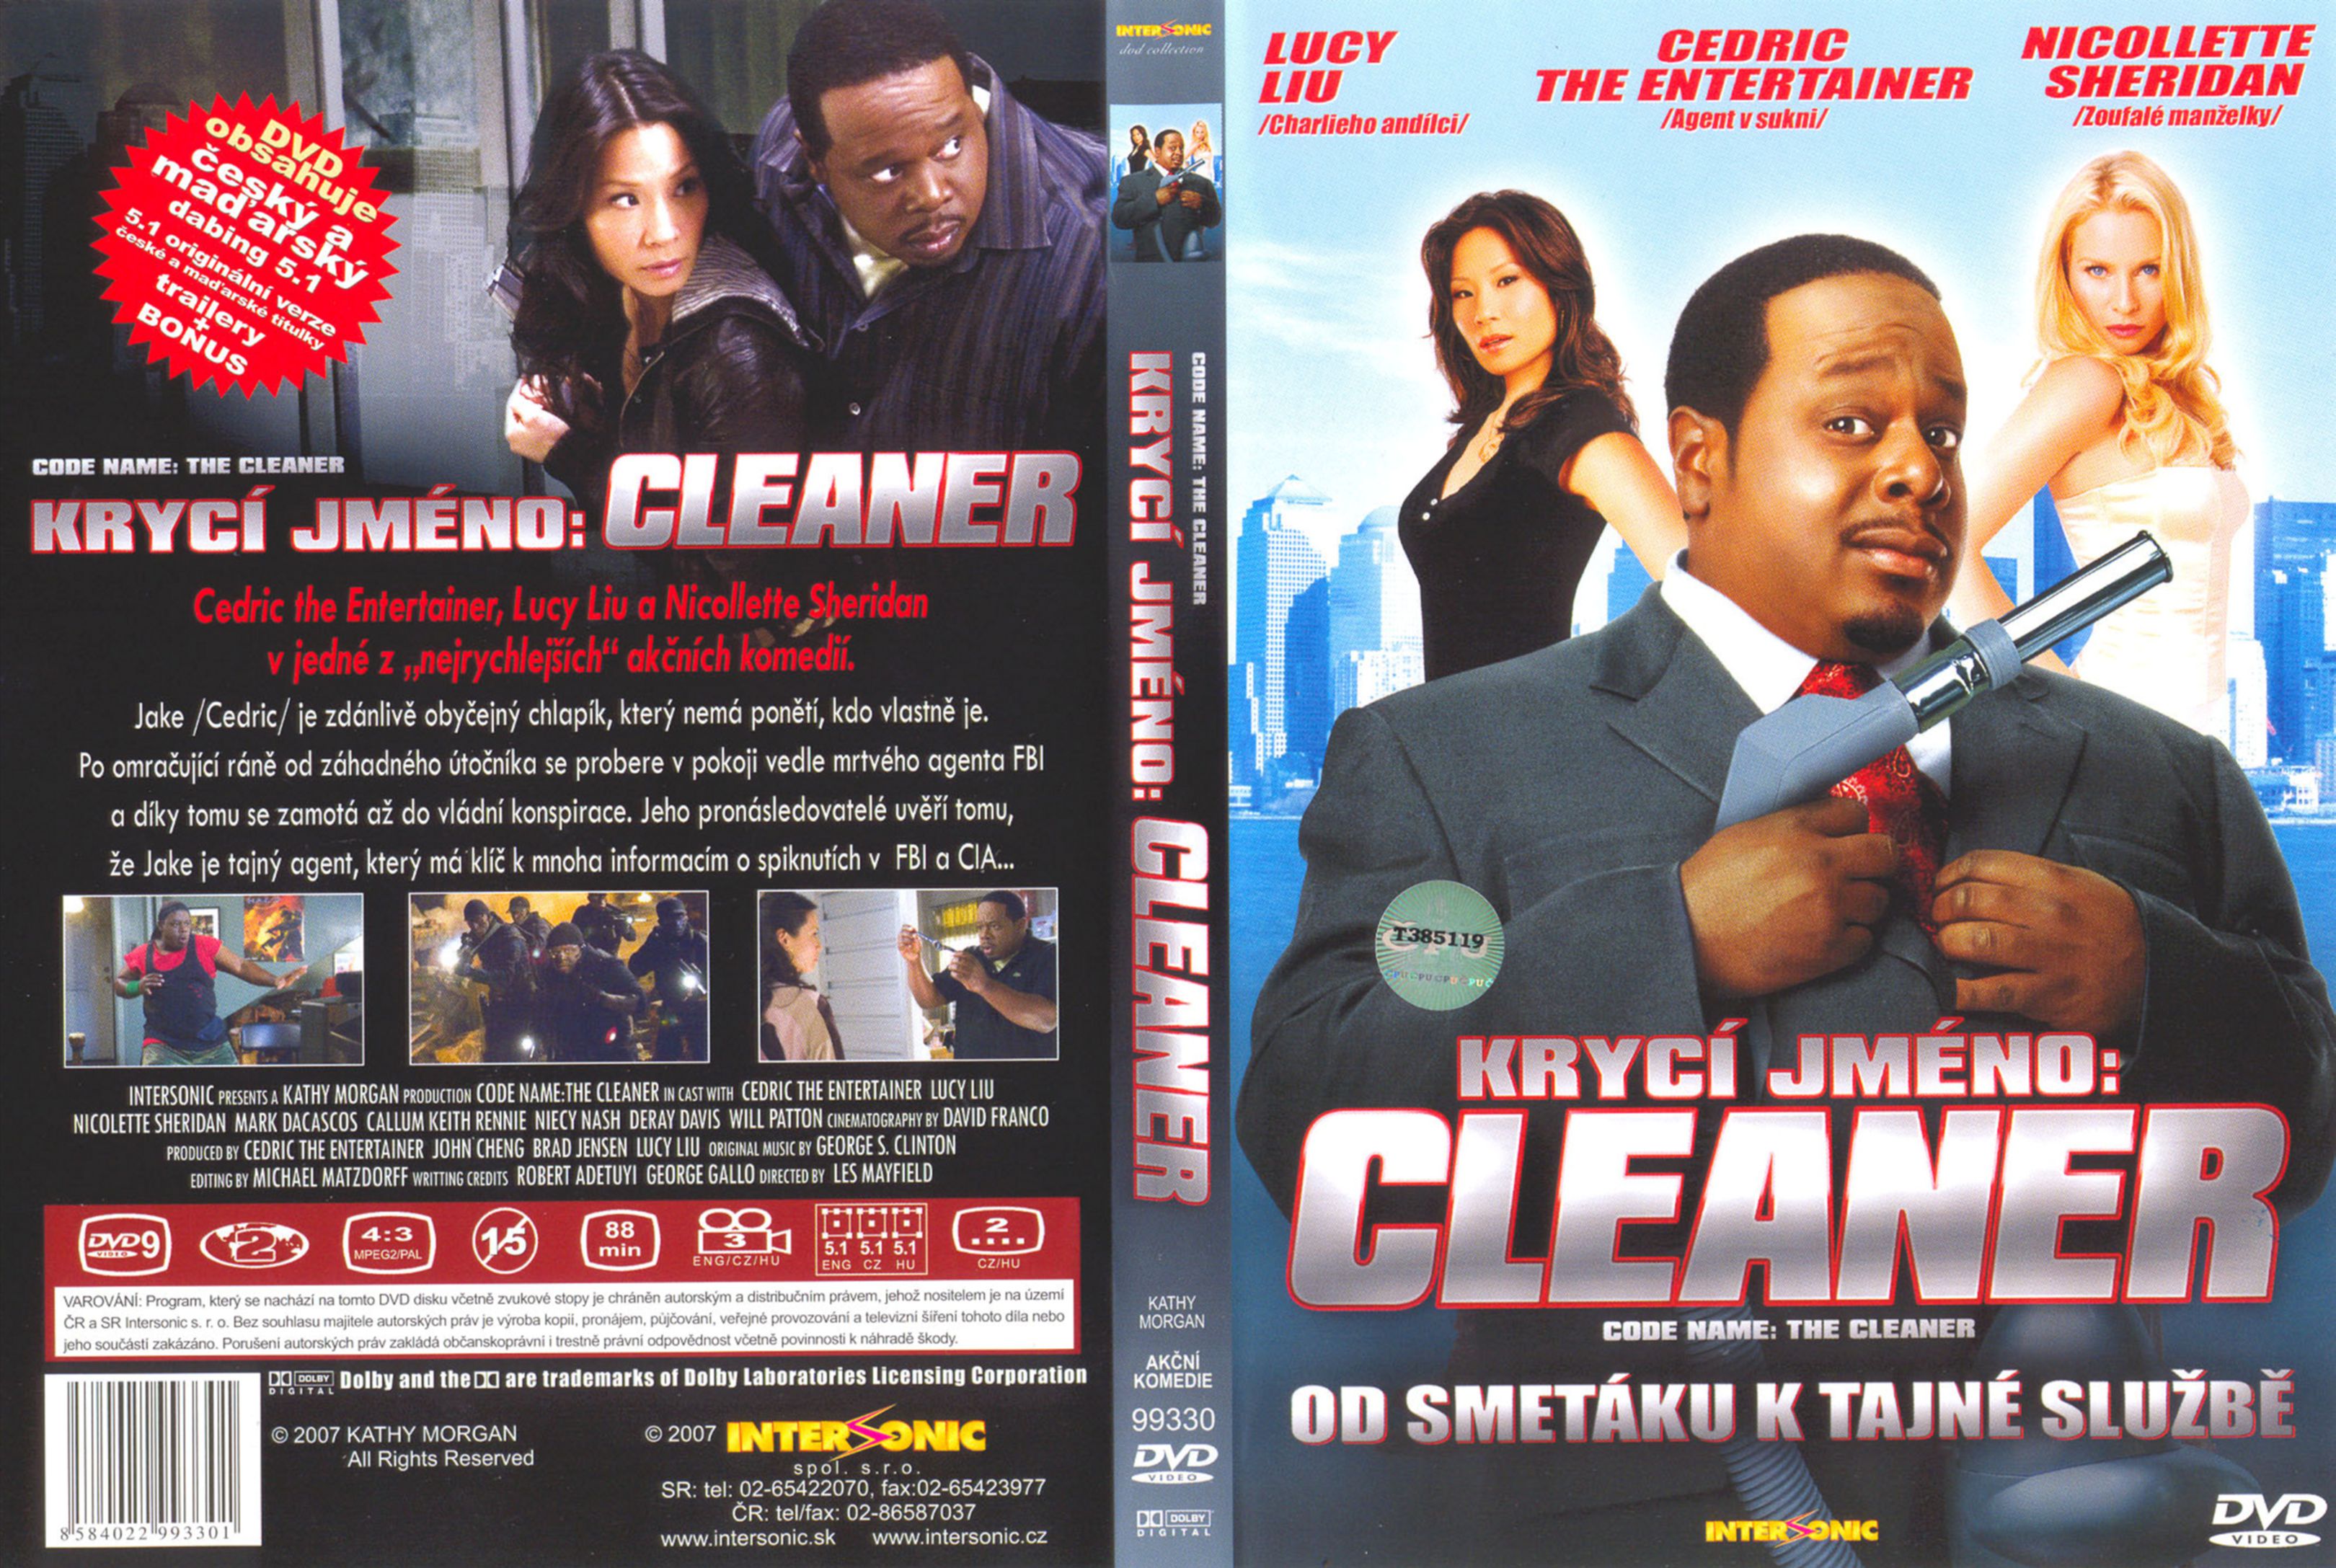 Чистильщик (2007). Cleaner 2007 обложки. Cedric the Entertainer code name: the Cleaner. Кодовое имя агента. App code name